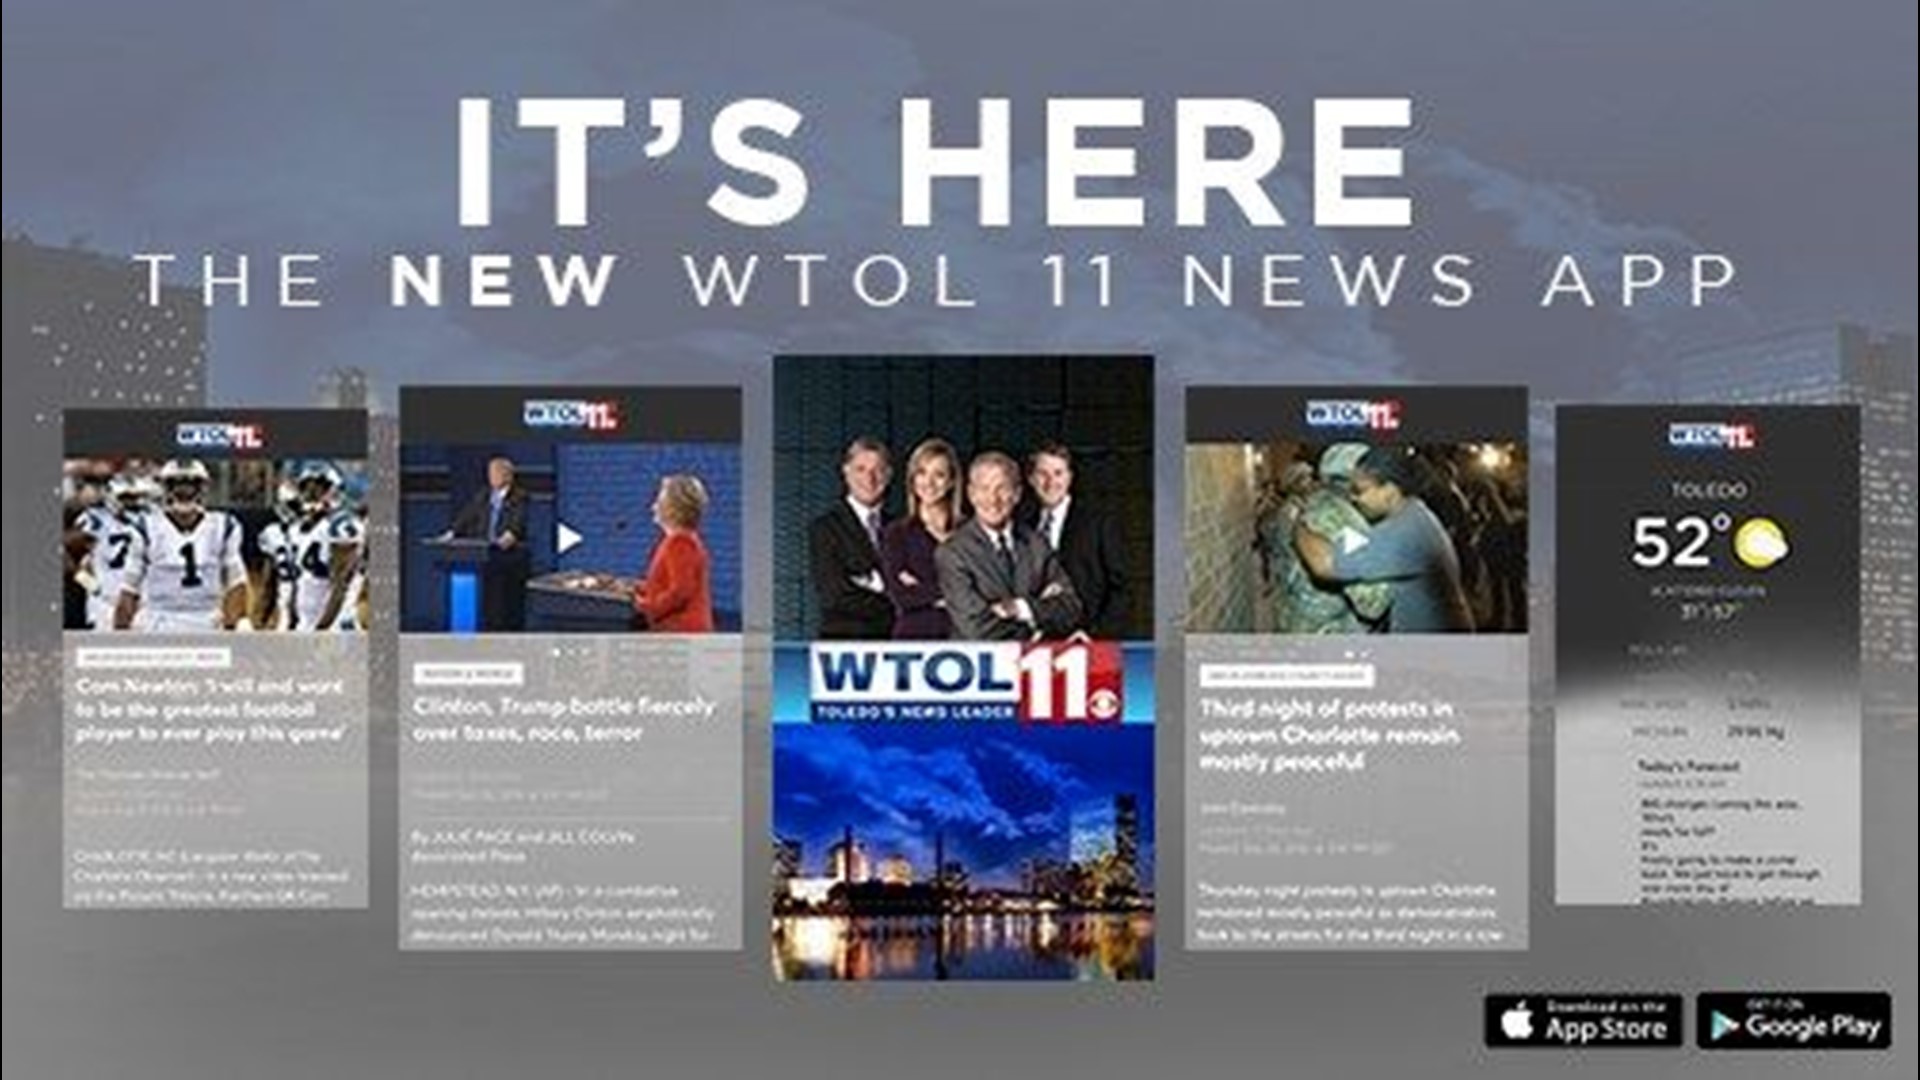 Update the new WTOL 11 News app